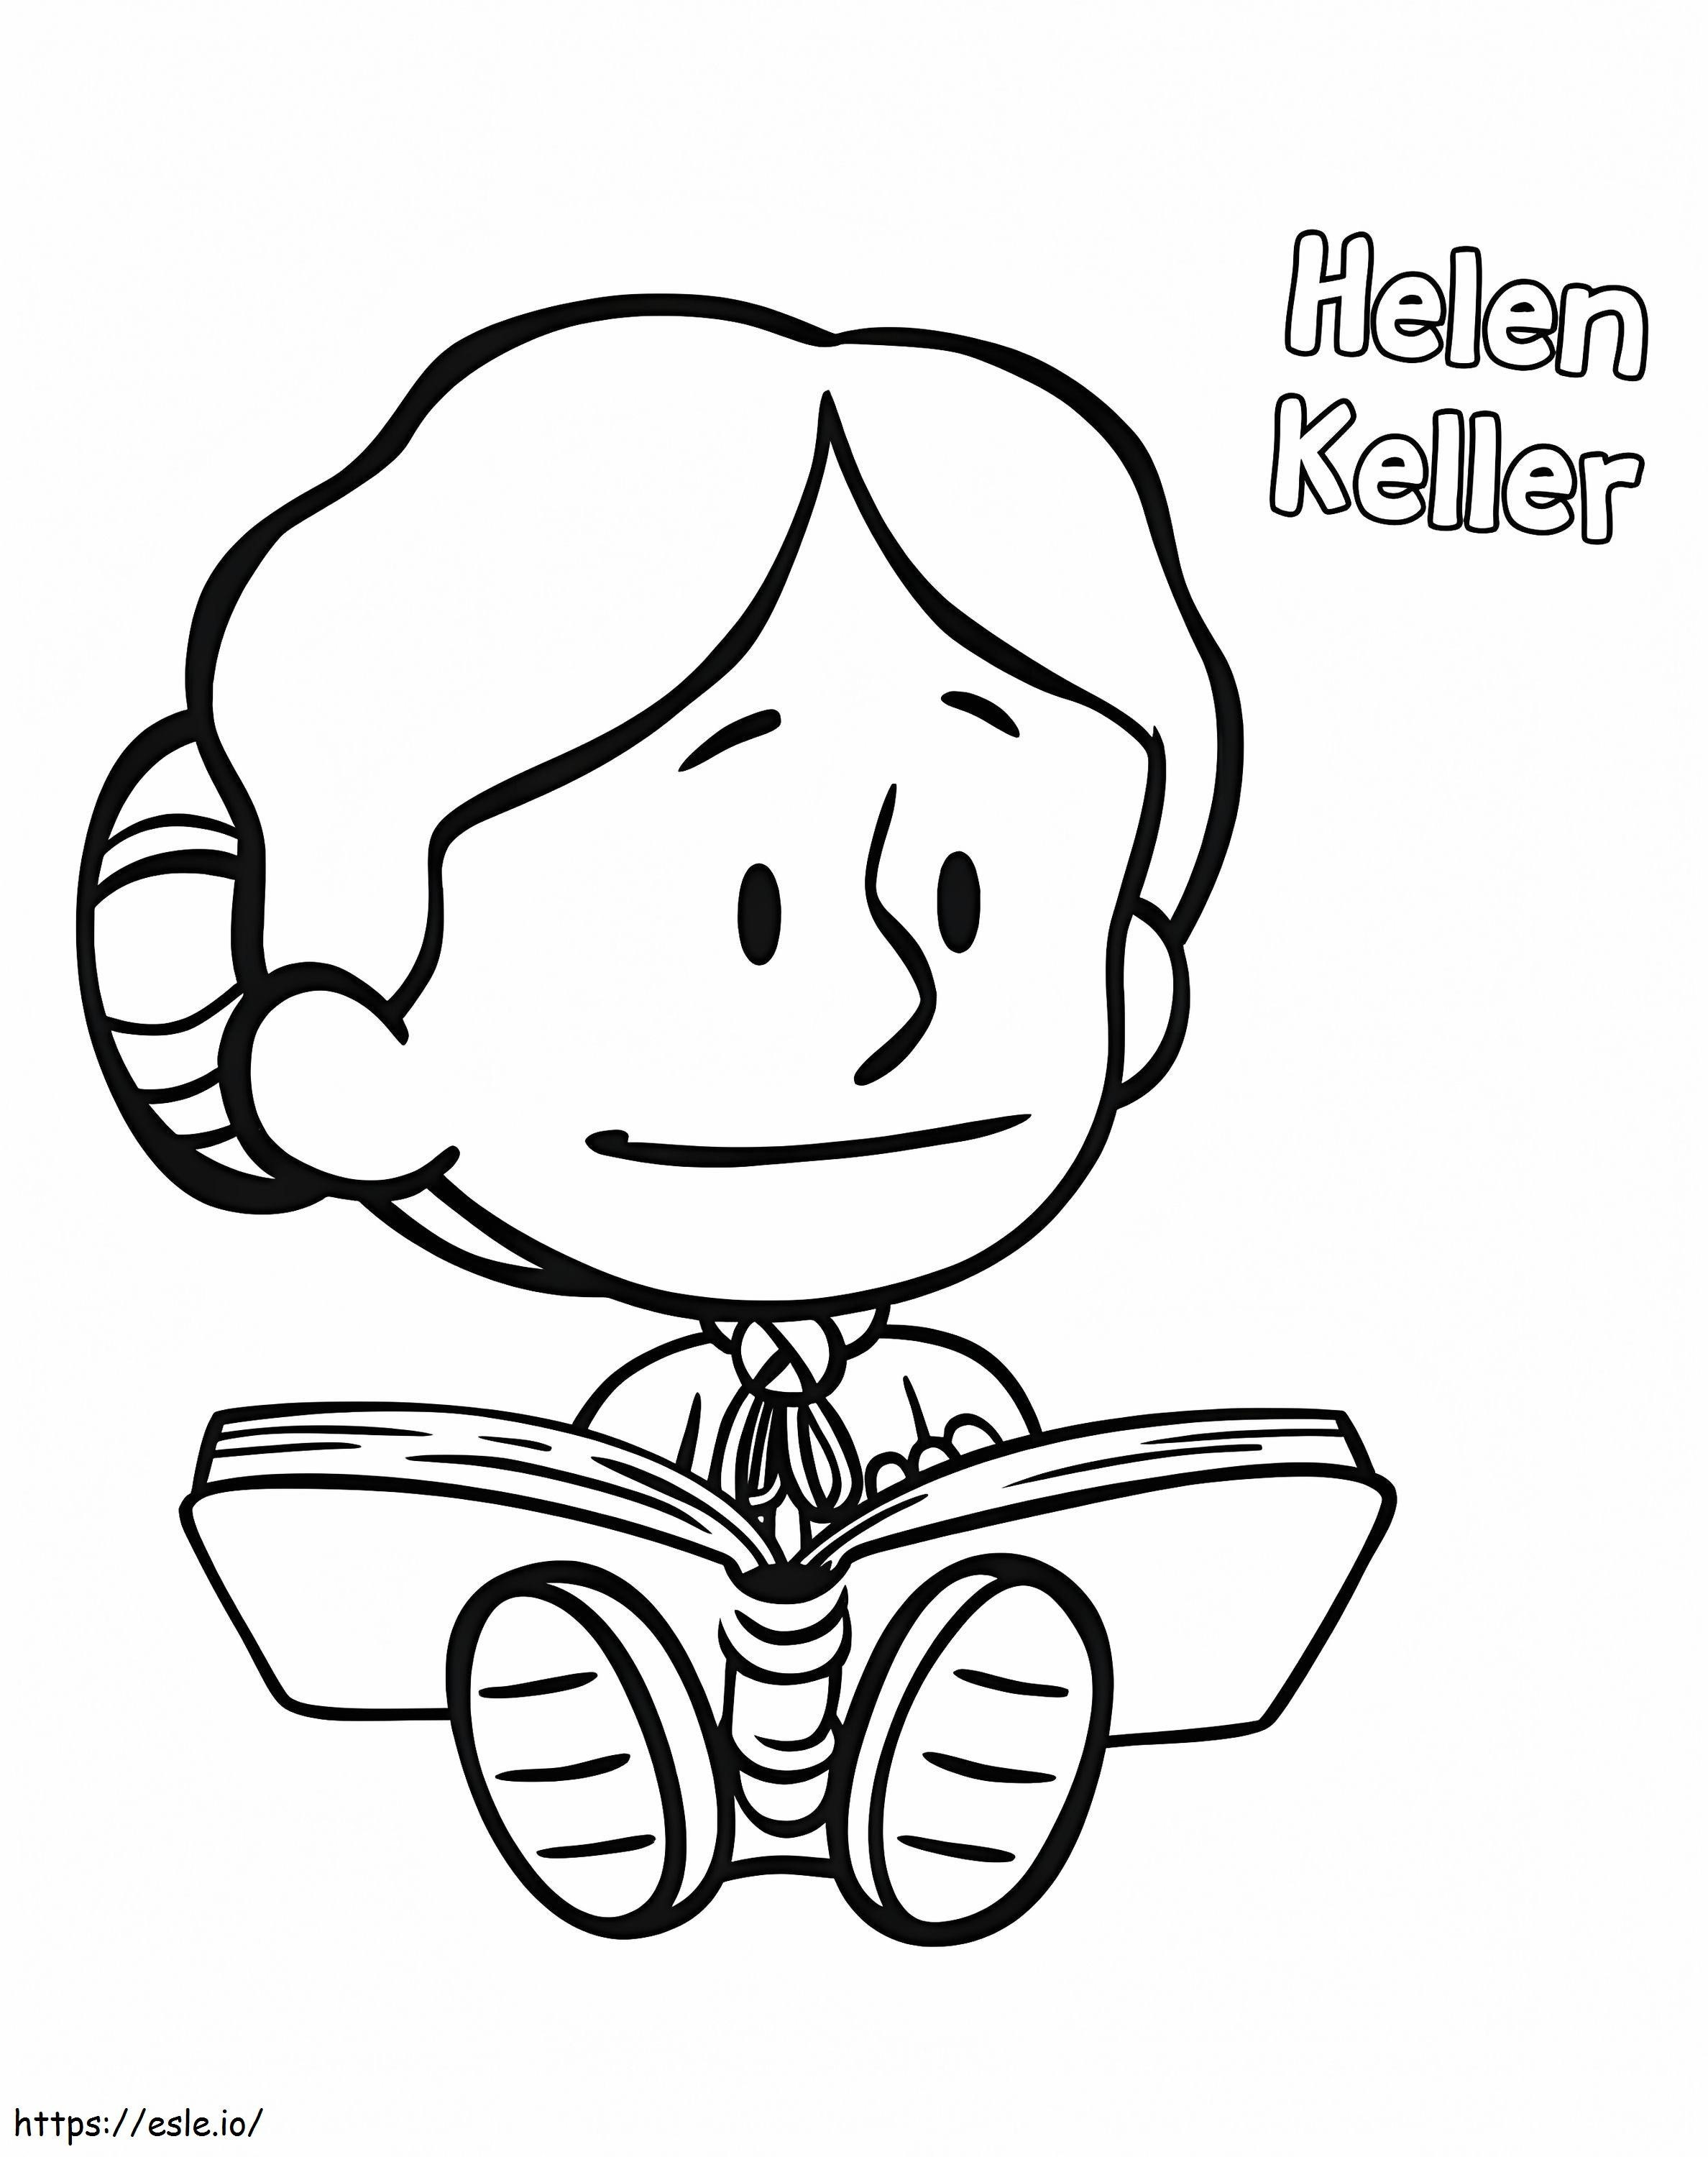 Chibi Helen Keller para colorear